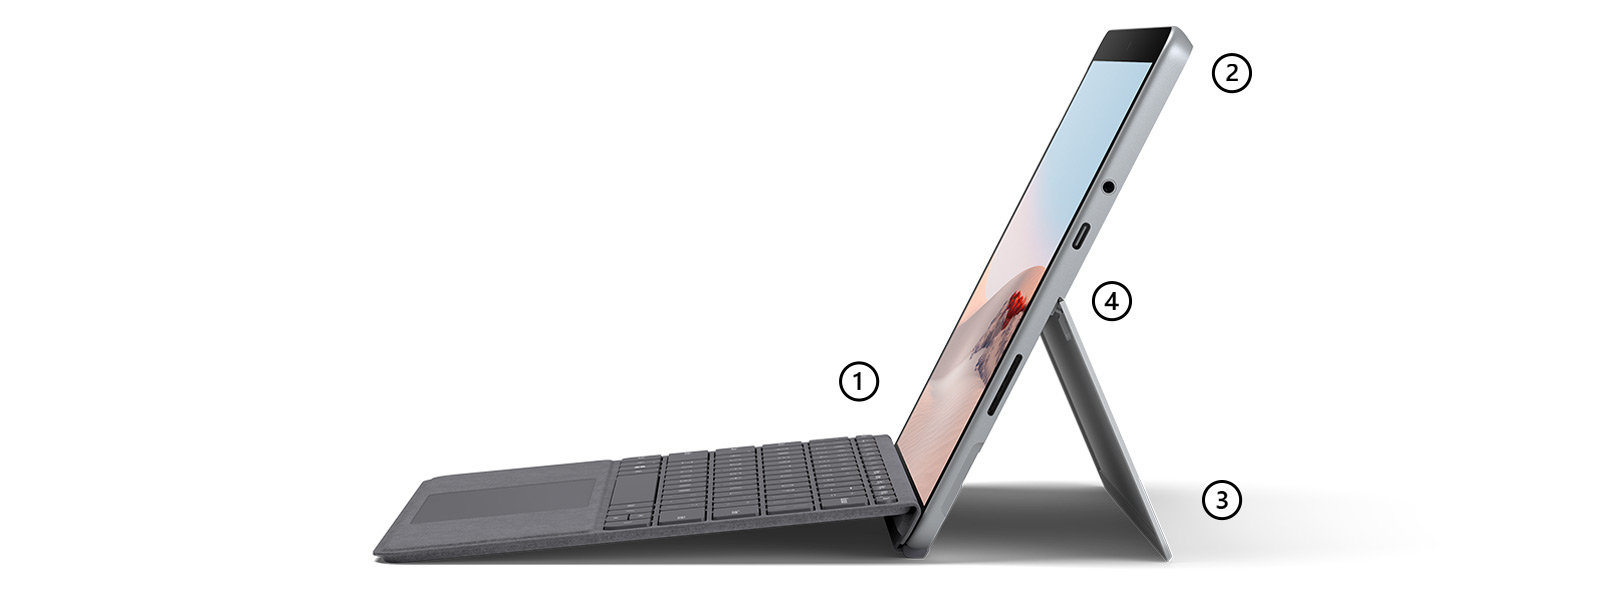 Surface Go 2 採用膝上型電腦模式並配備白金色 Surface Go Signature 實體鍵盤保護蓋，並且重點標示具有手寫筆功能的觸控螢幕、麥克風和相機、Kickstand 支架和 USB-C 連接埠